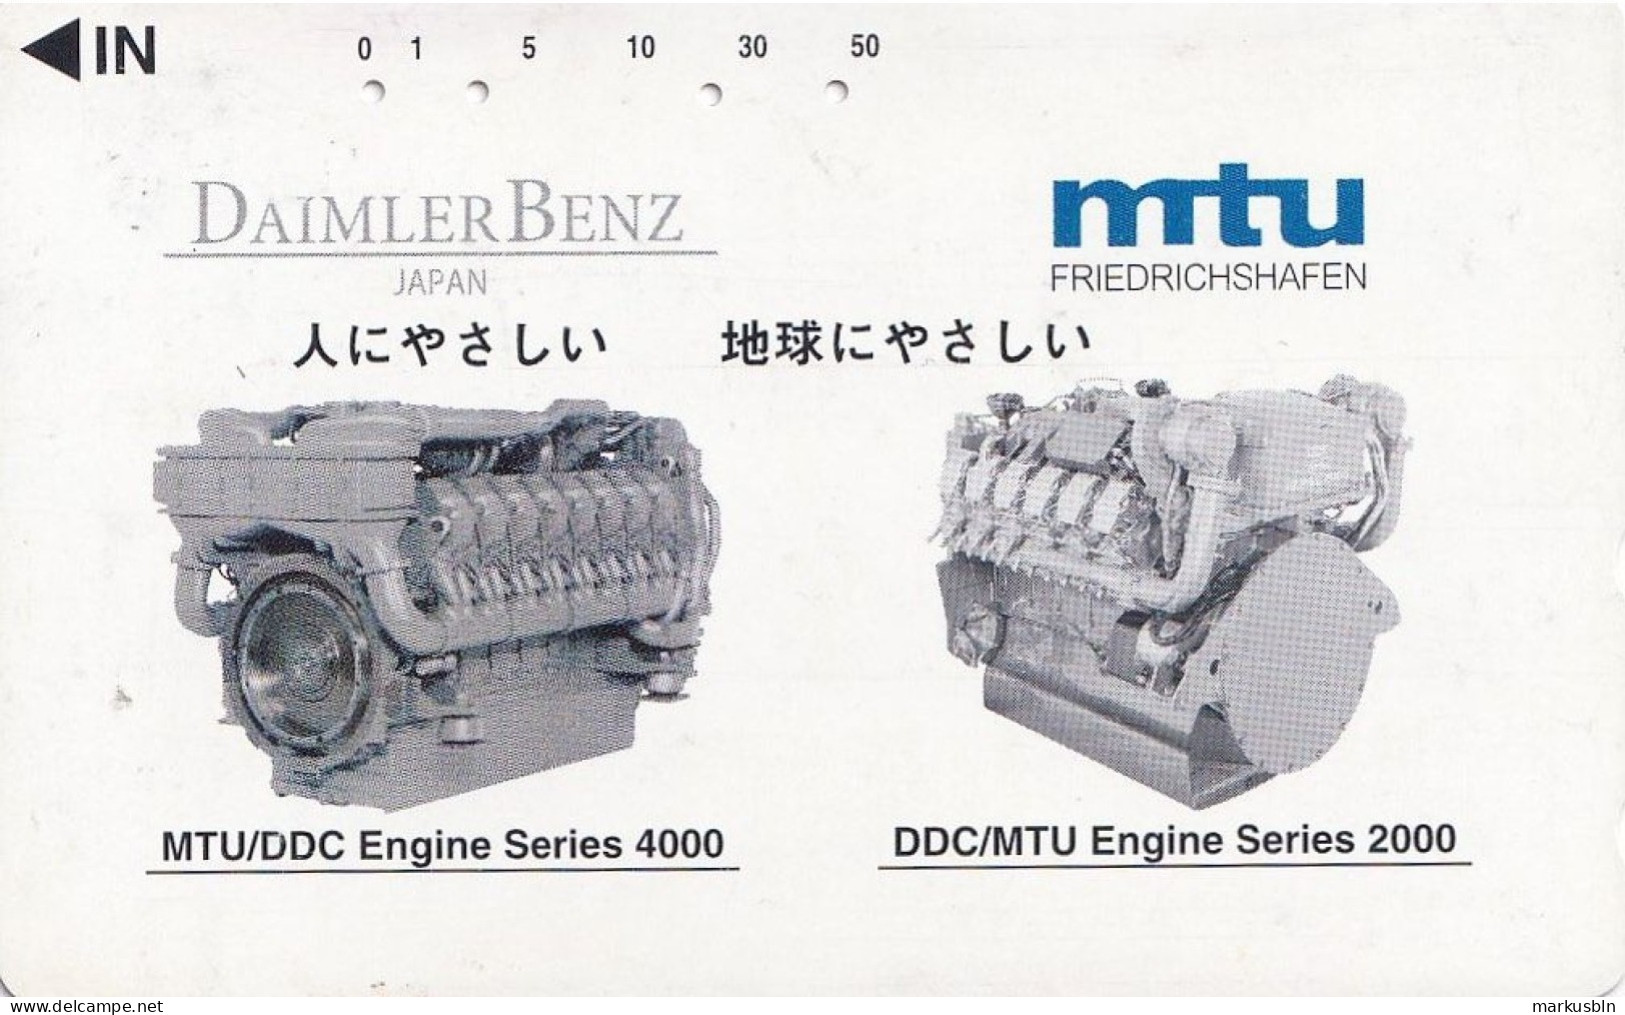 Japan Tamura 50u Old Private 110 - 016 Mercedes Daimler Benz Engine - Japan